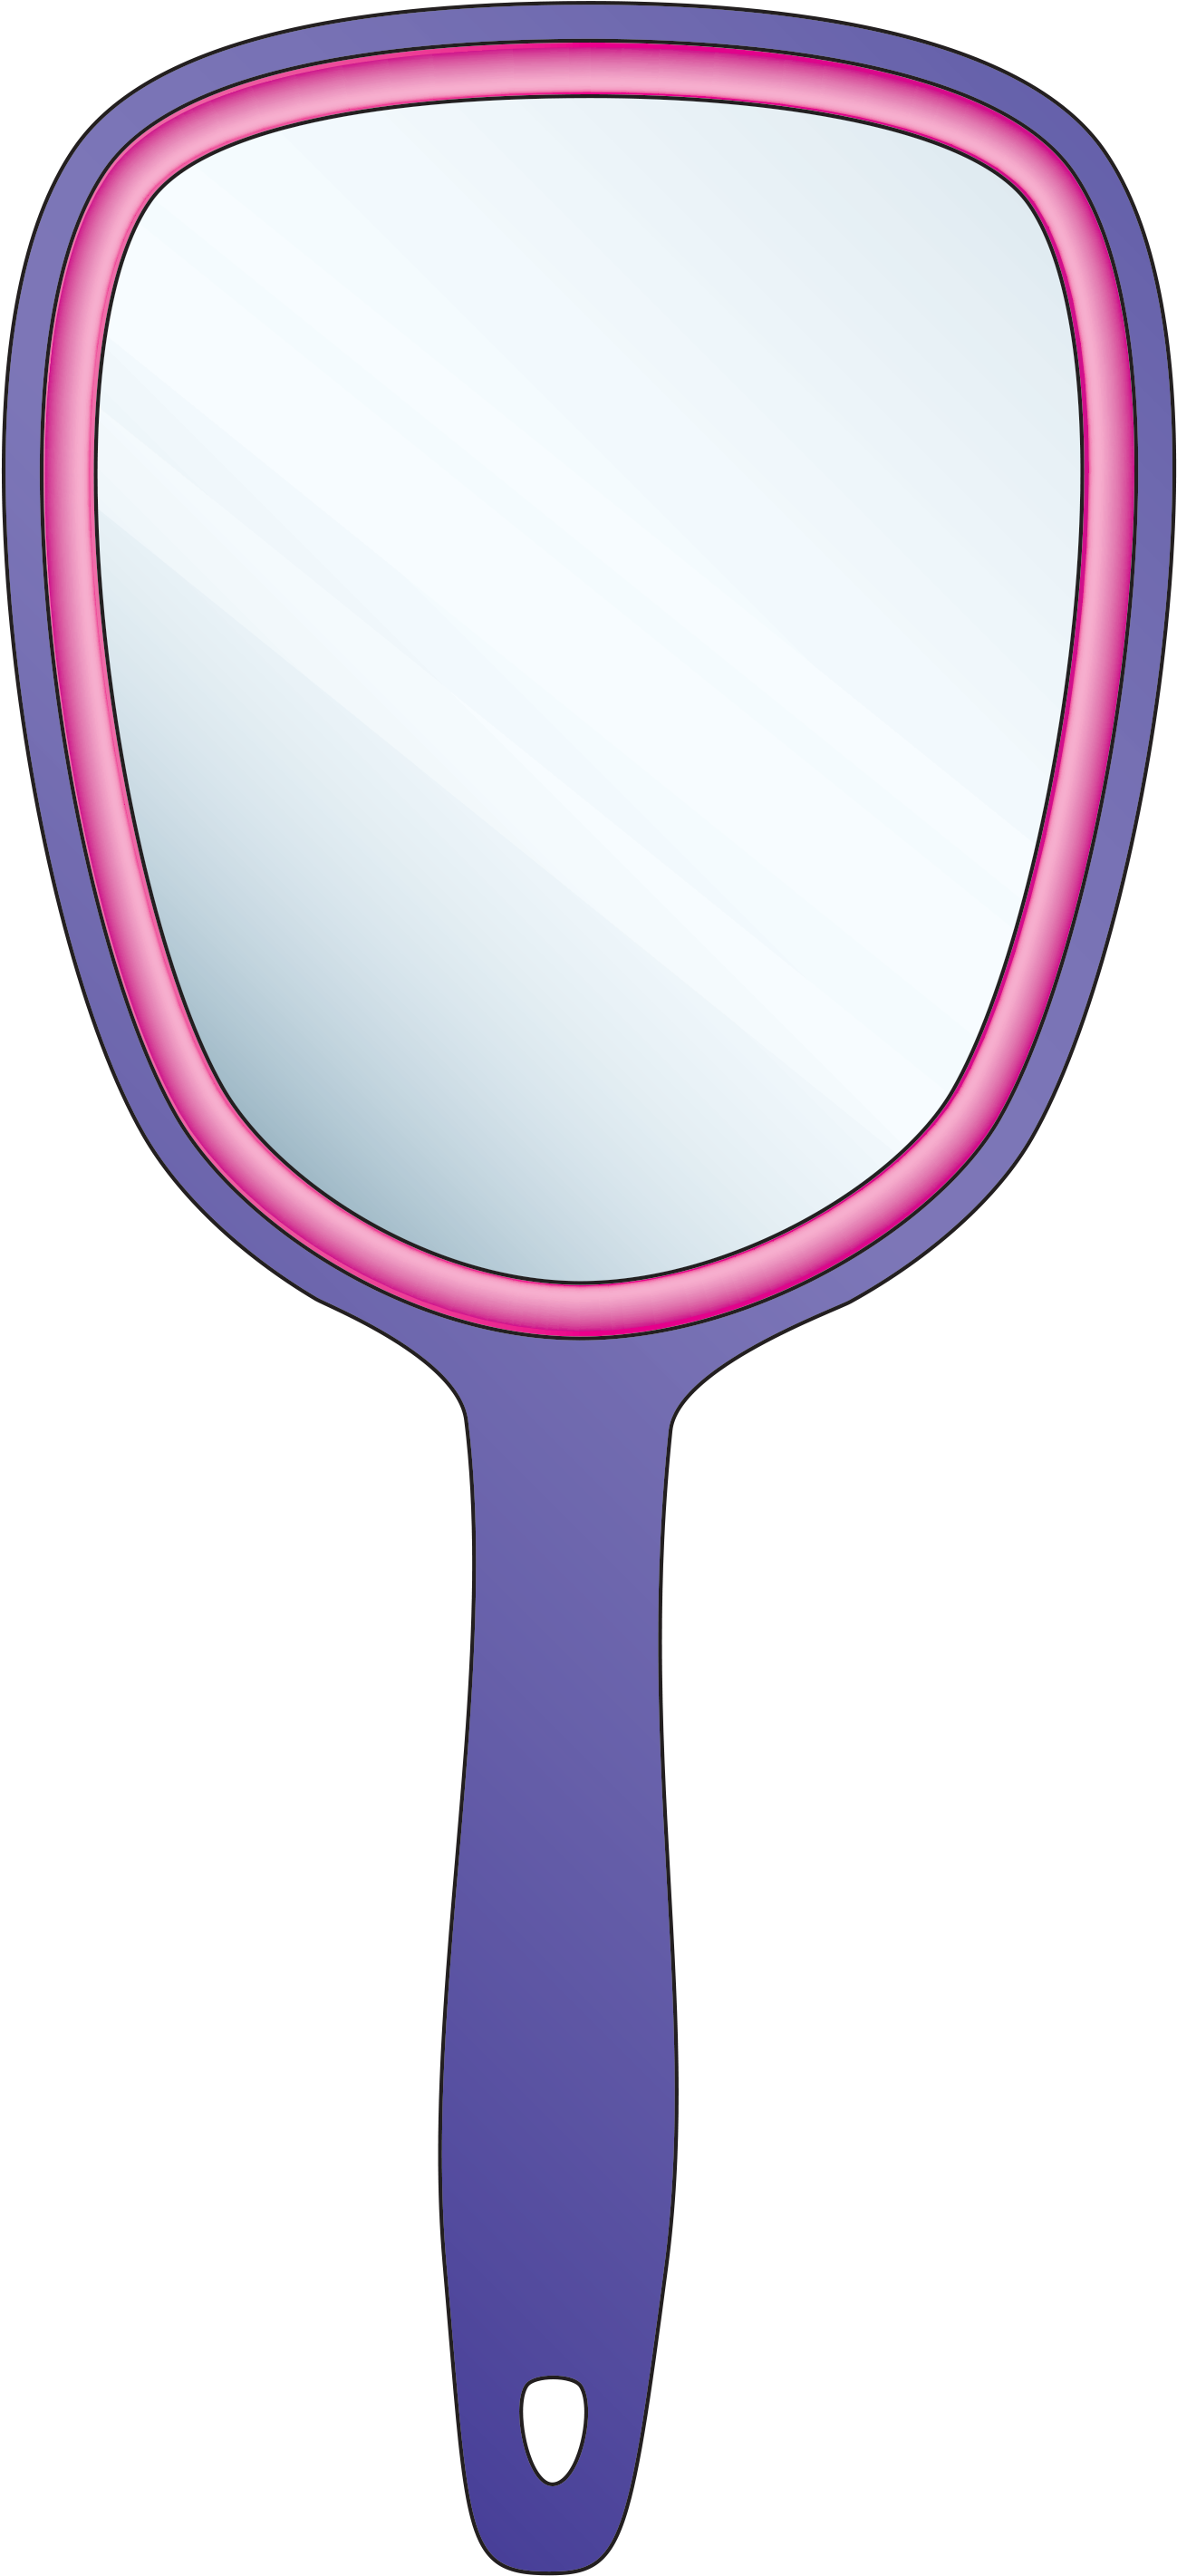 Mirror, Mirror - Racket (2550x3300)